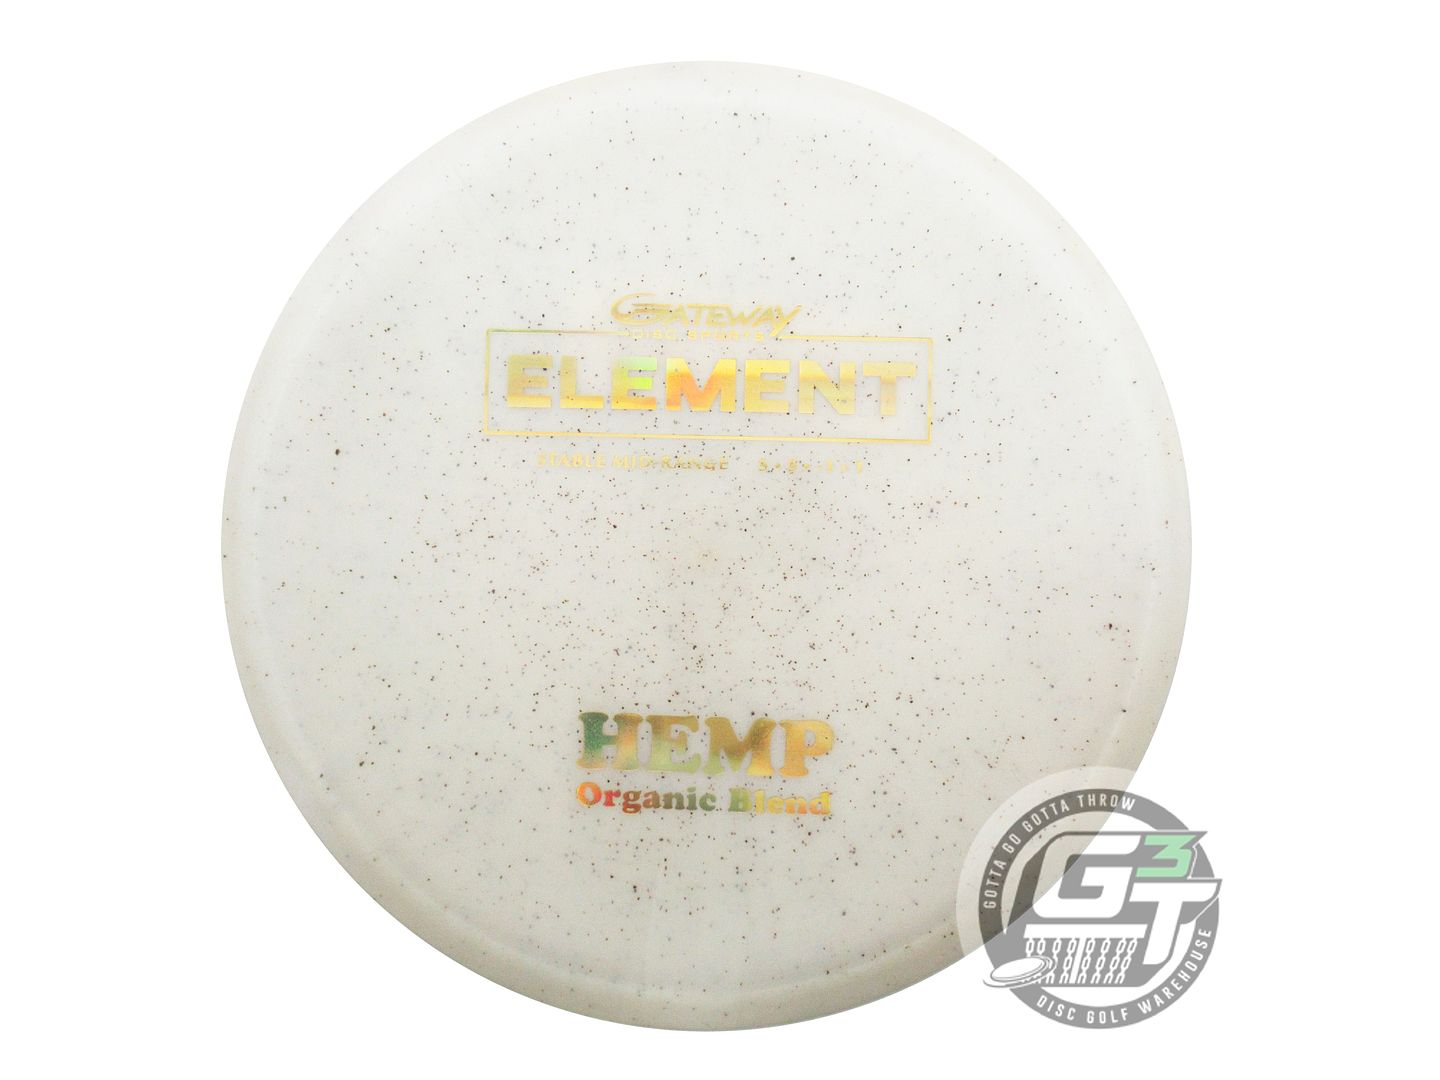 Gateway Diamond Hemp Element Midrange Golf Disc (Individually Listed)